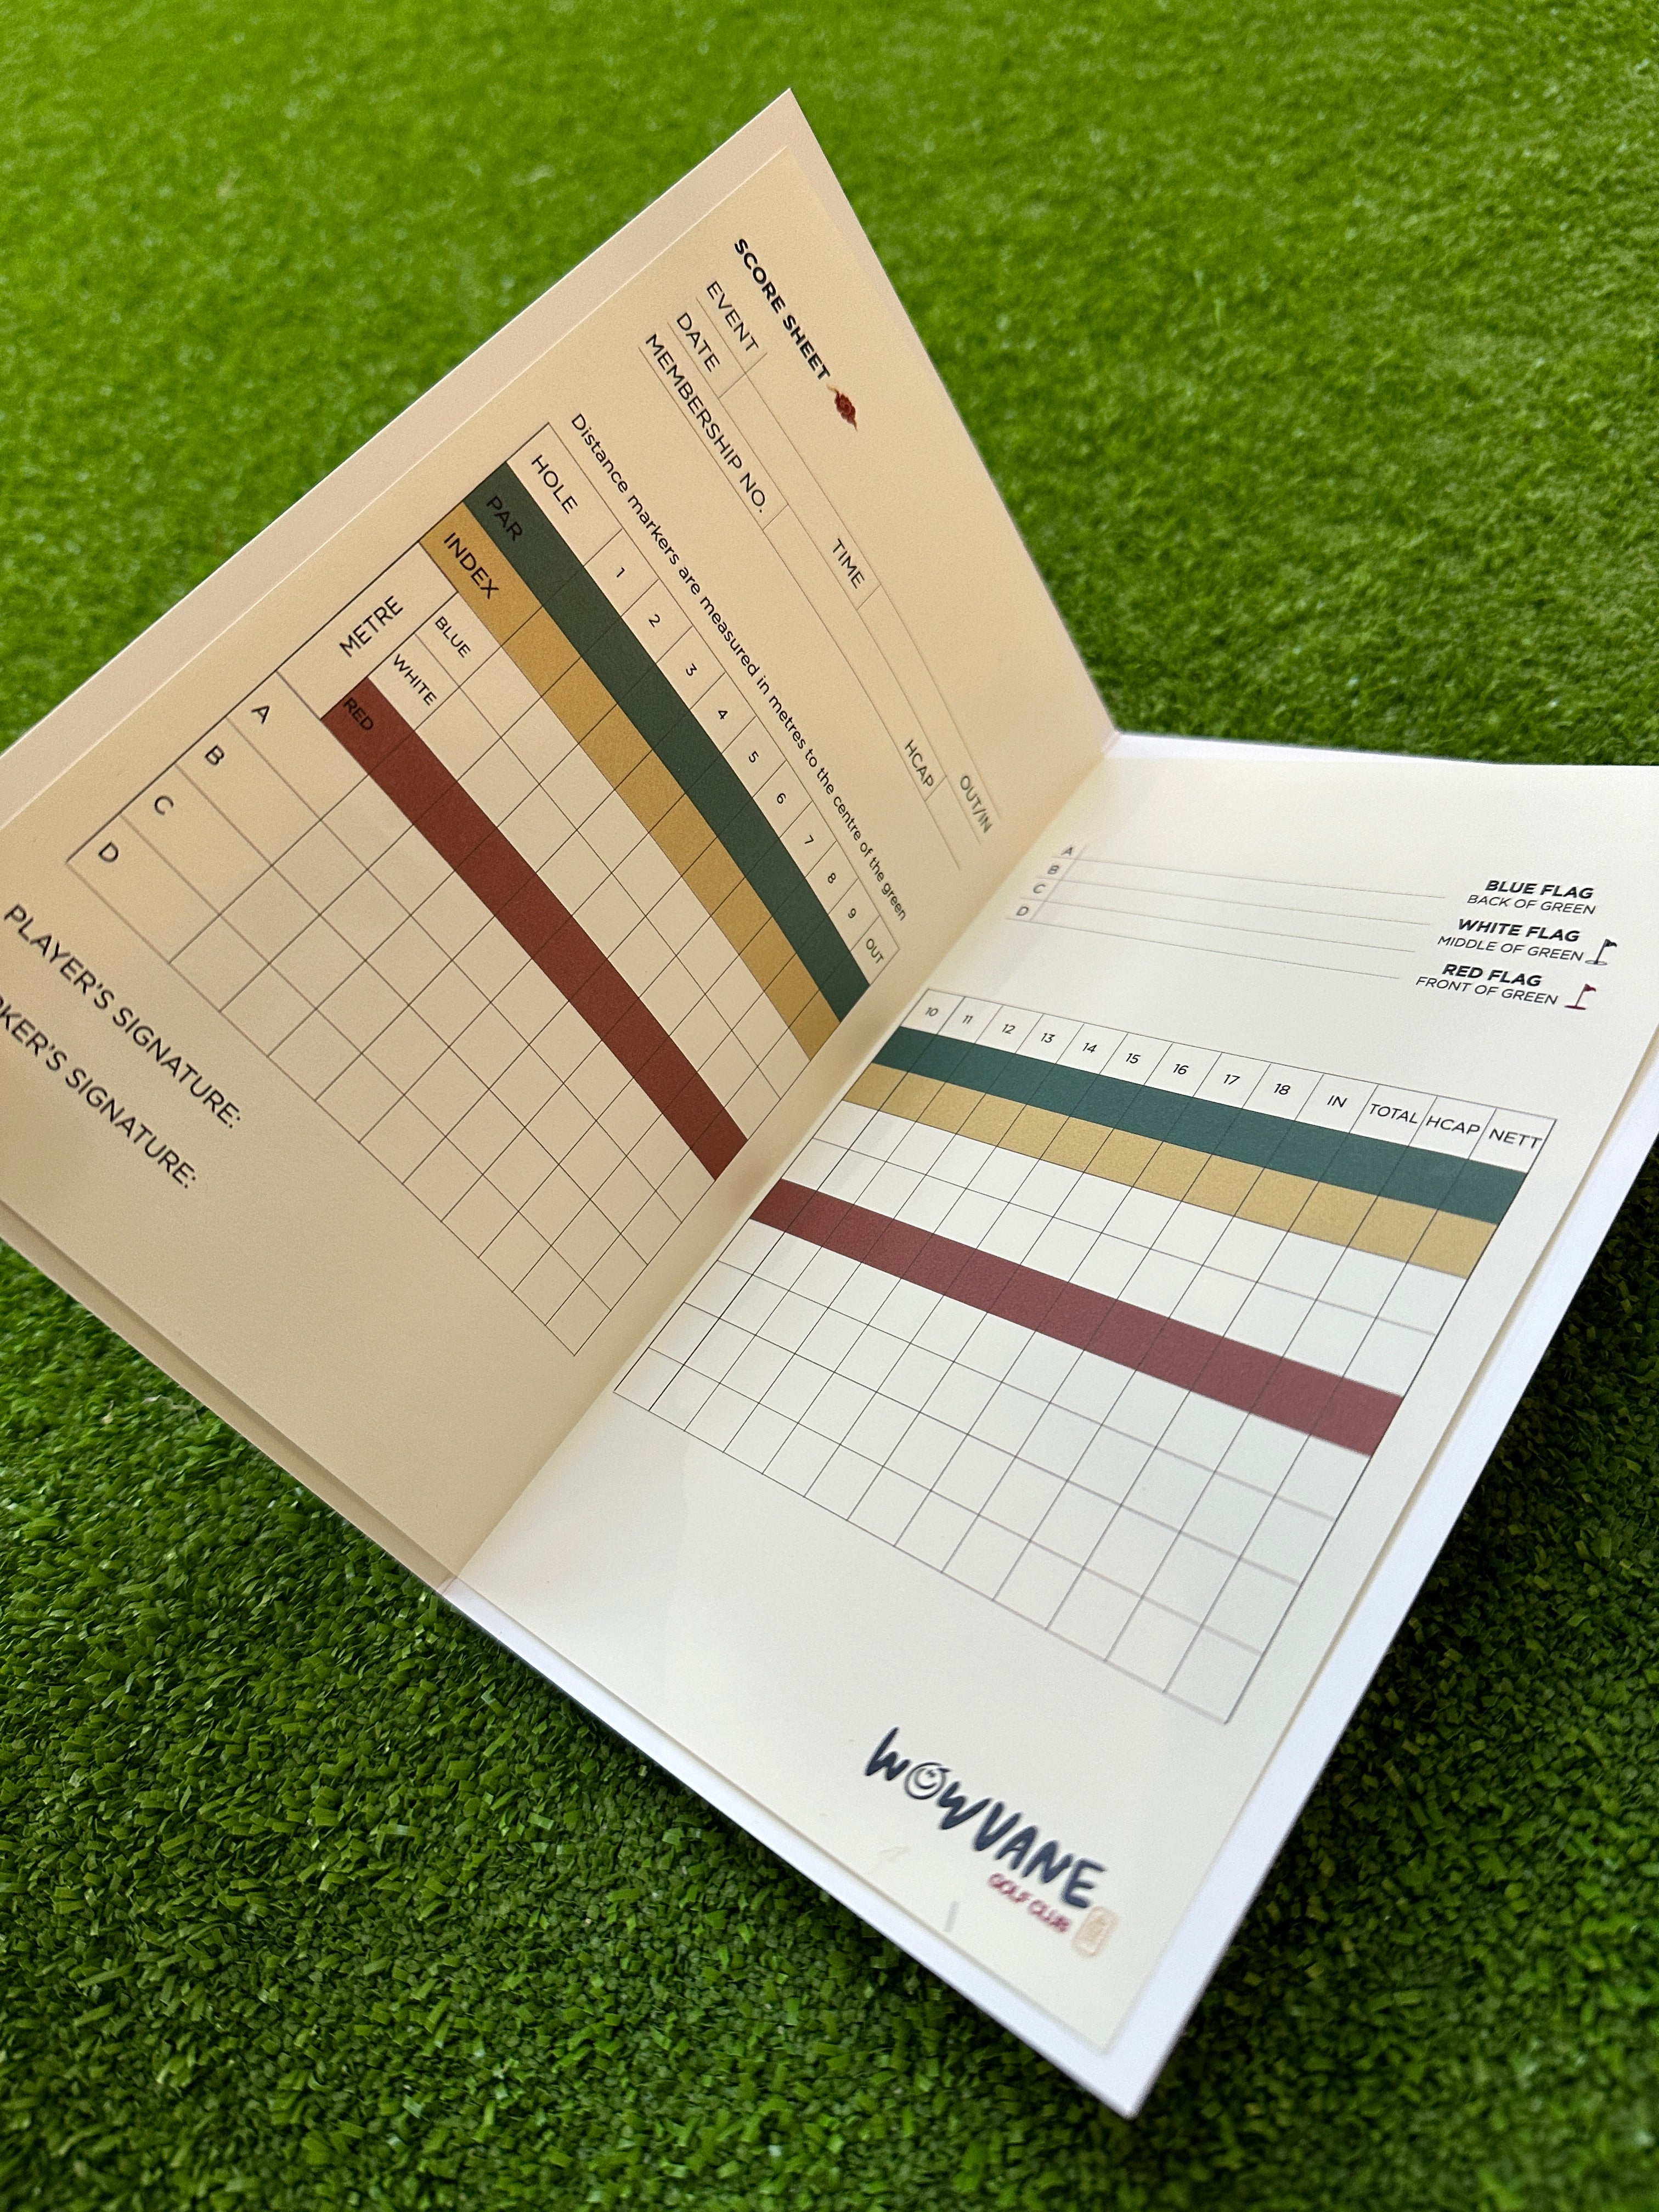 WOWVANE Golf Scorecard A must-have item on the training ground